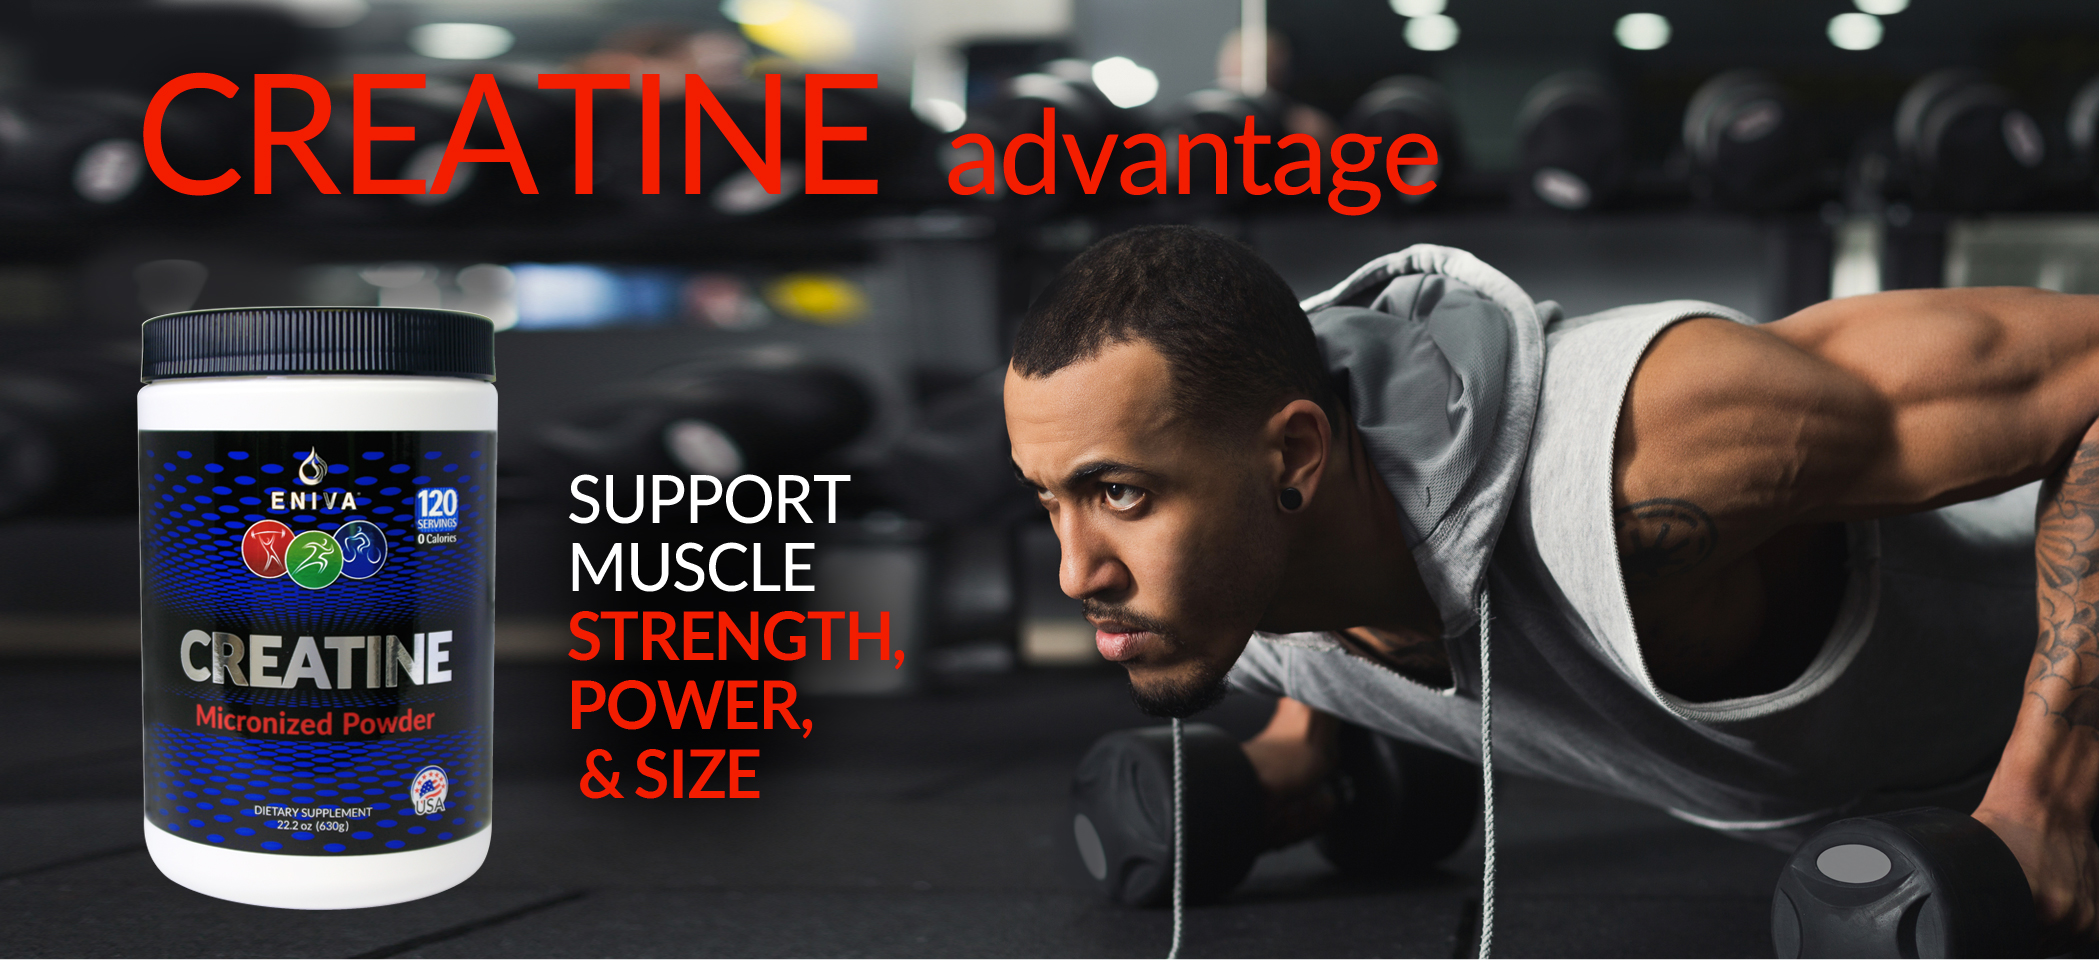 creatine-details.jpg Eniva muscle strength, power, size